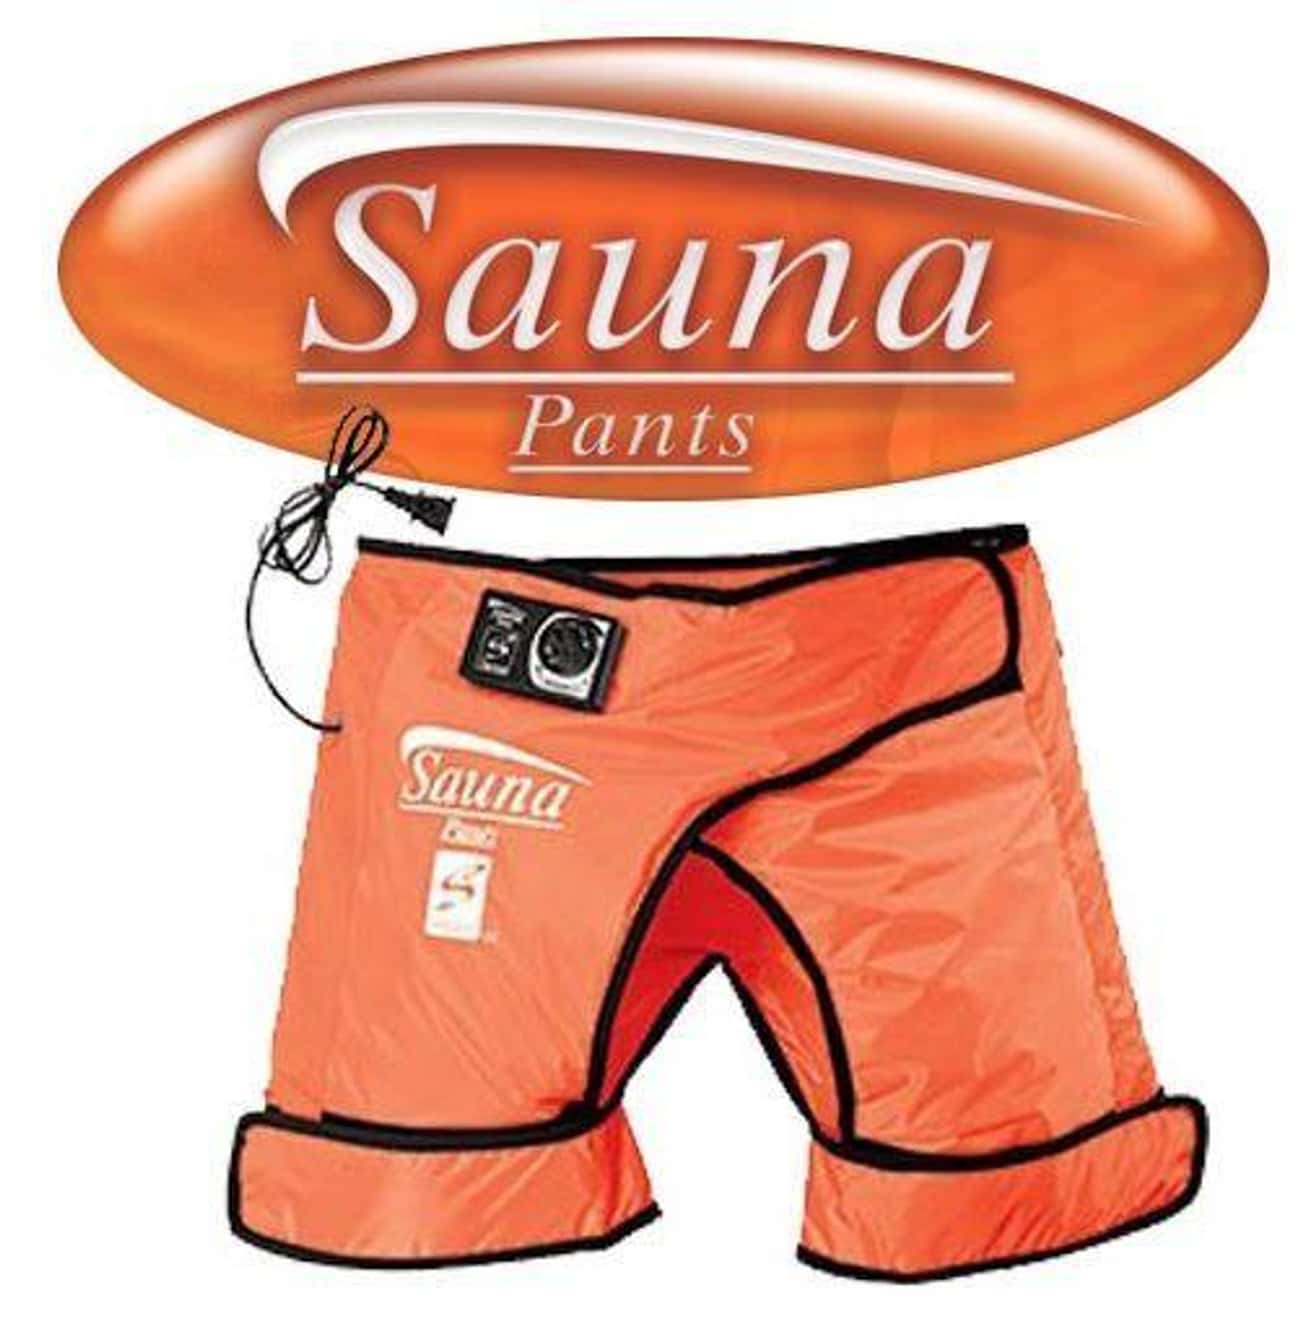 Sauna Pants